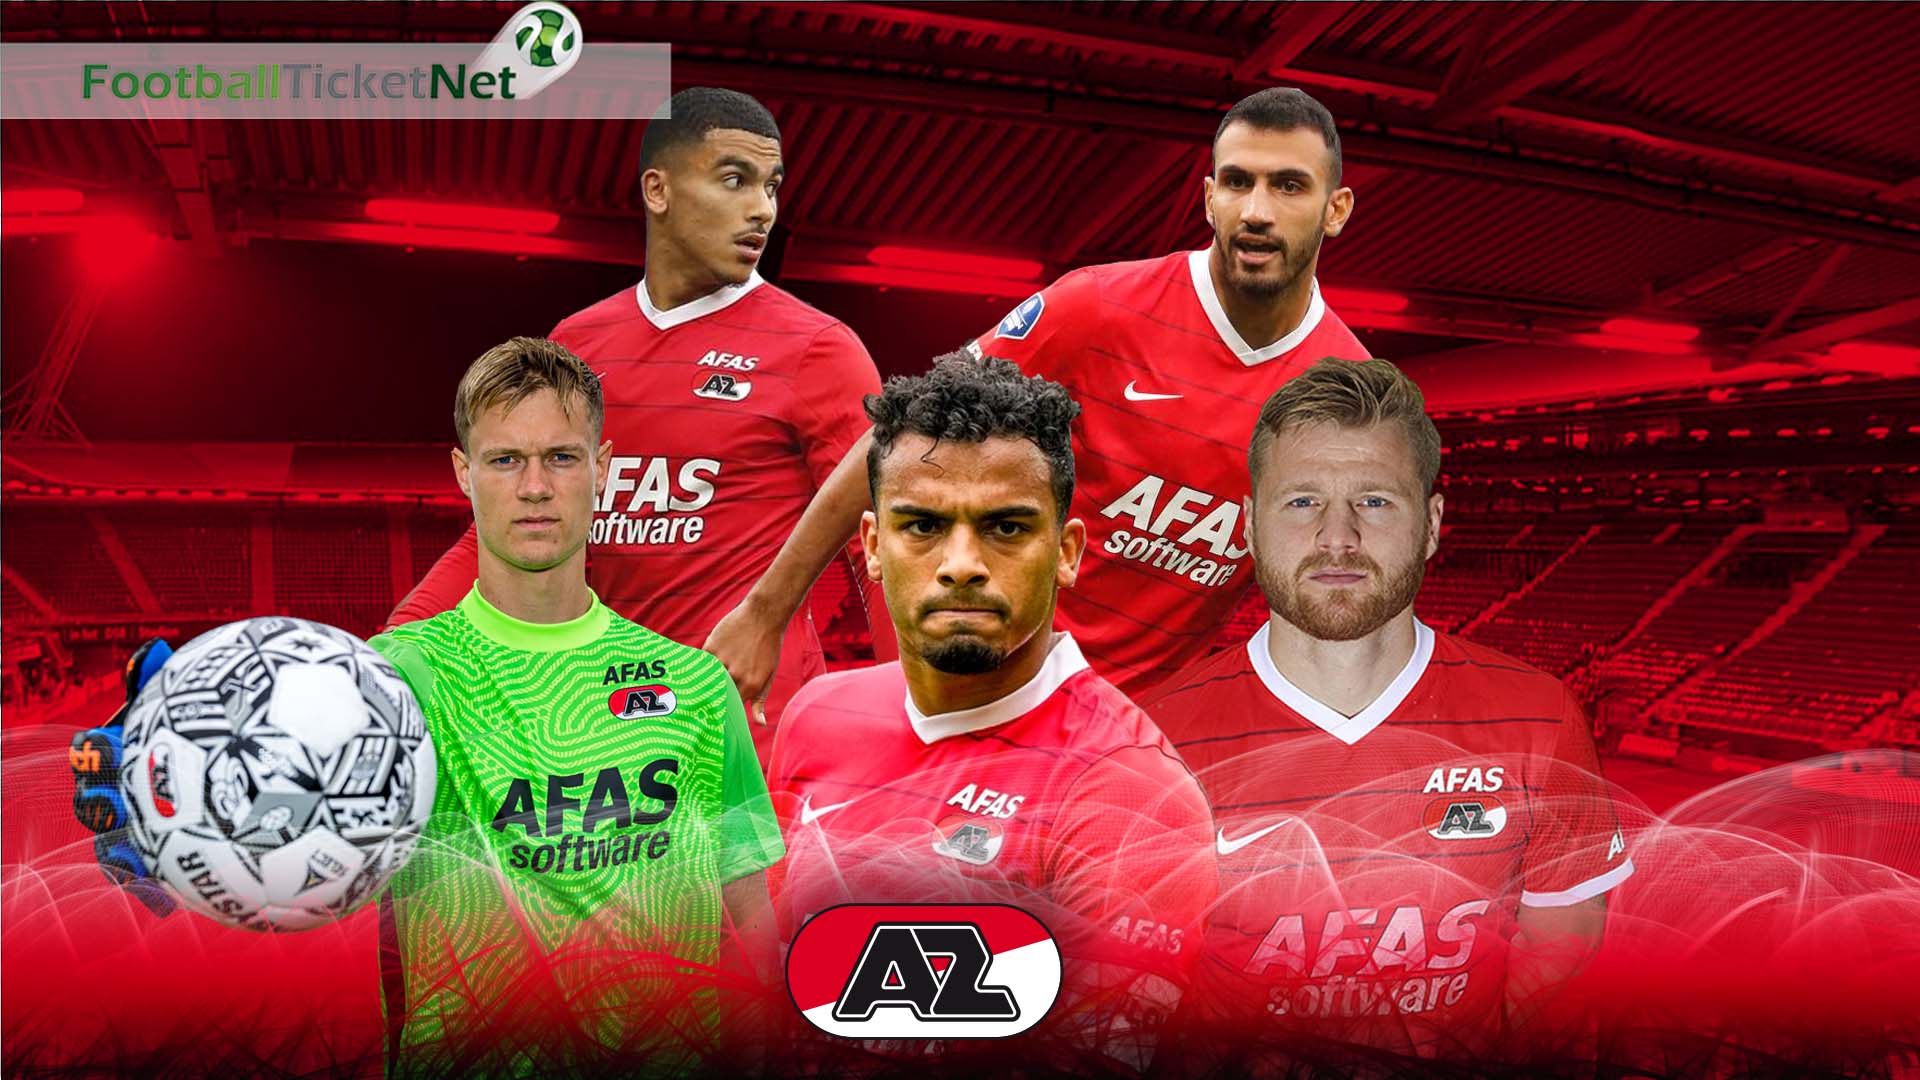 Buy AZ Alkmaar Football Tickets 2019/20 | Football Ticket Net